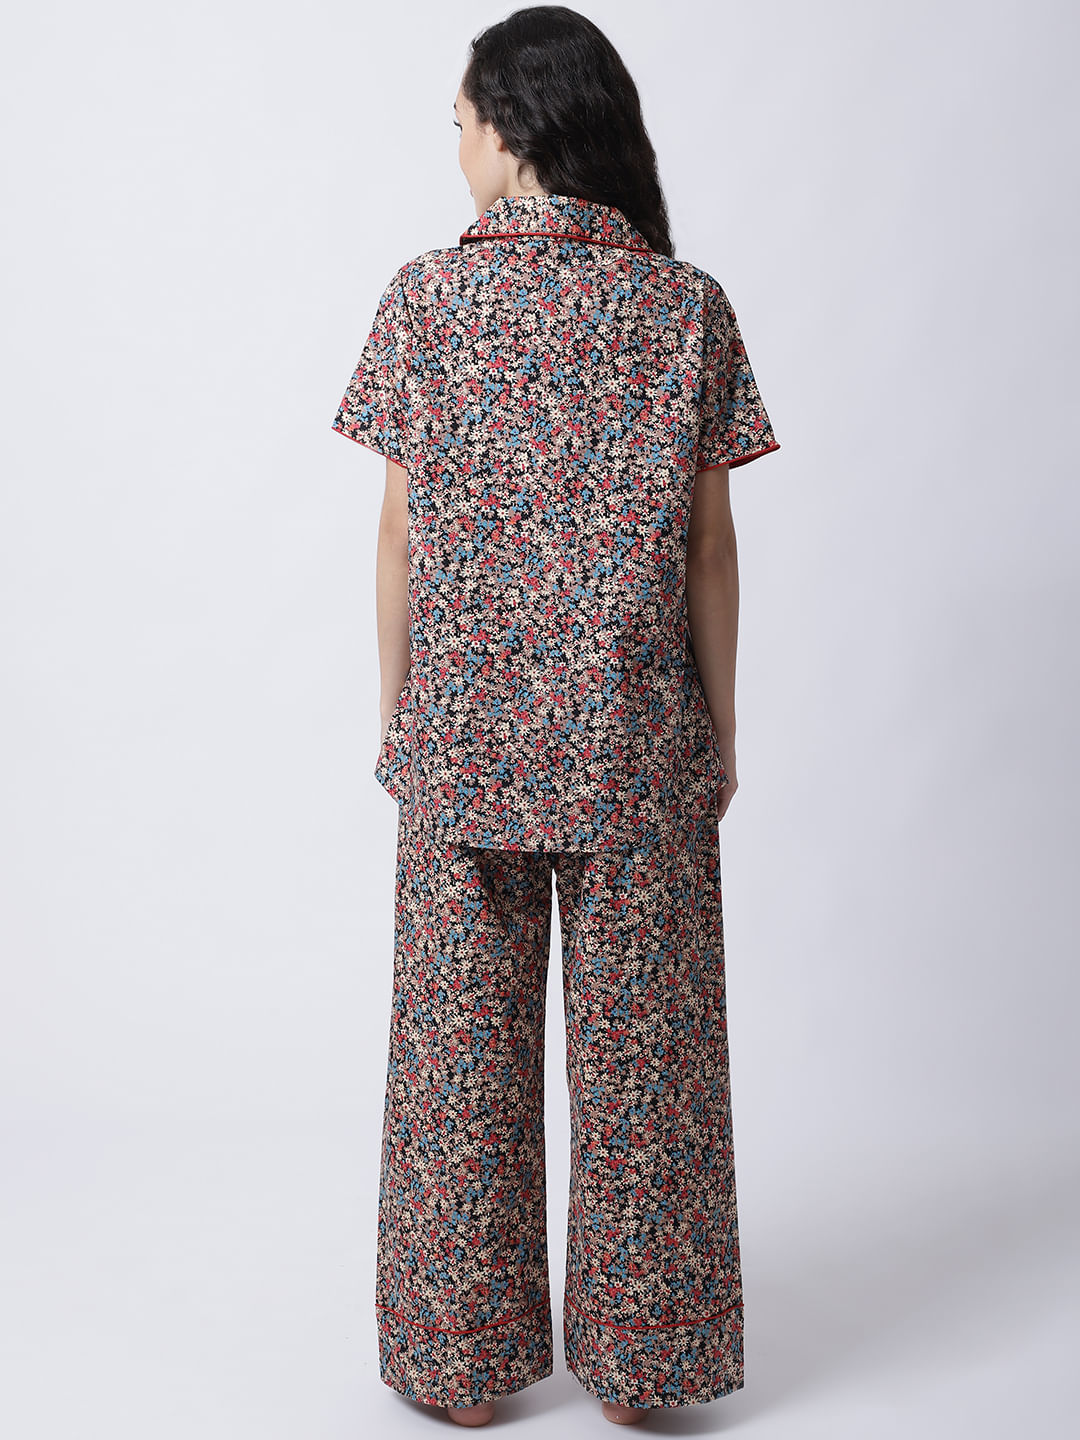 Cotton Floral Printed Night Suit set of Shirt & Pyjama trouser